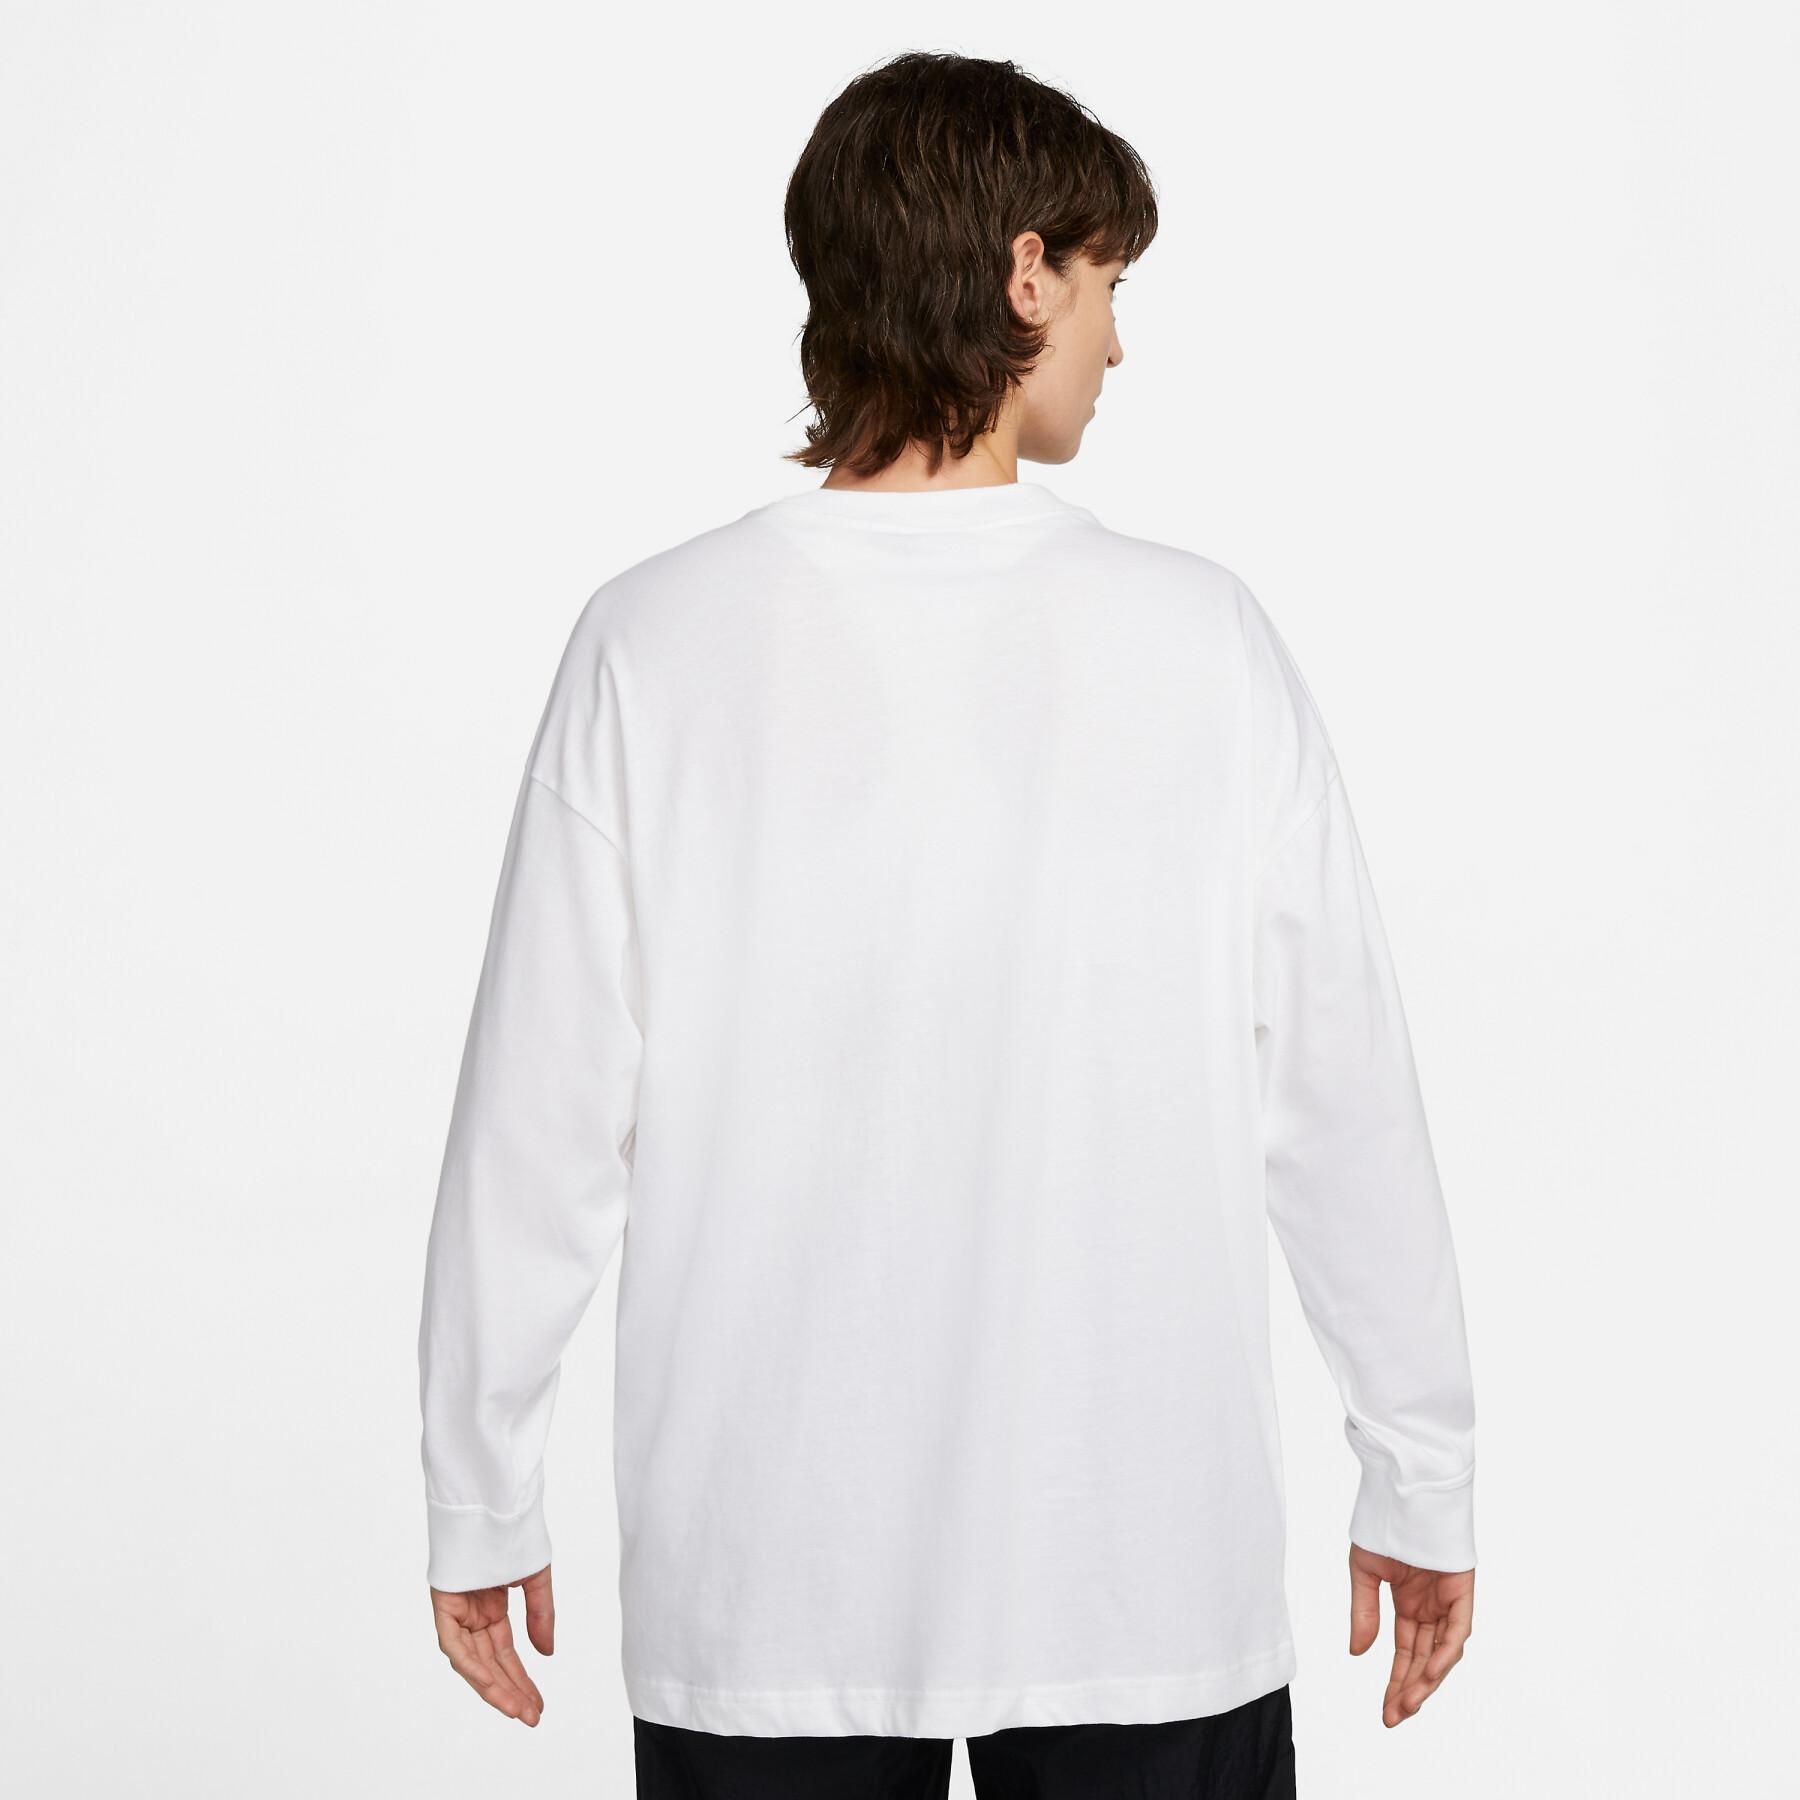 Women's long sleeve T-shirt Nike Essential